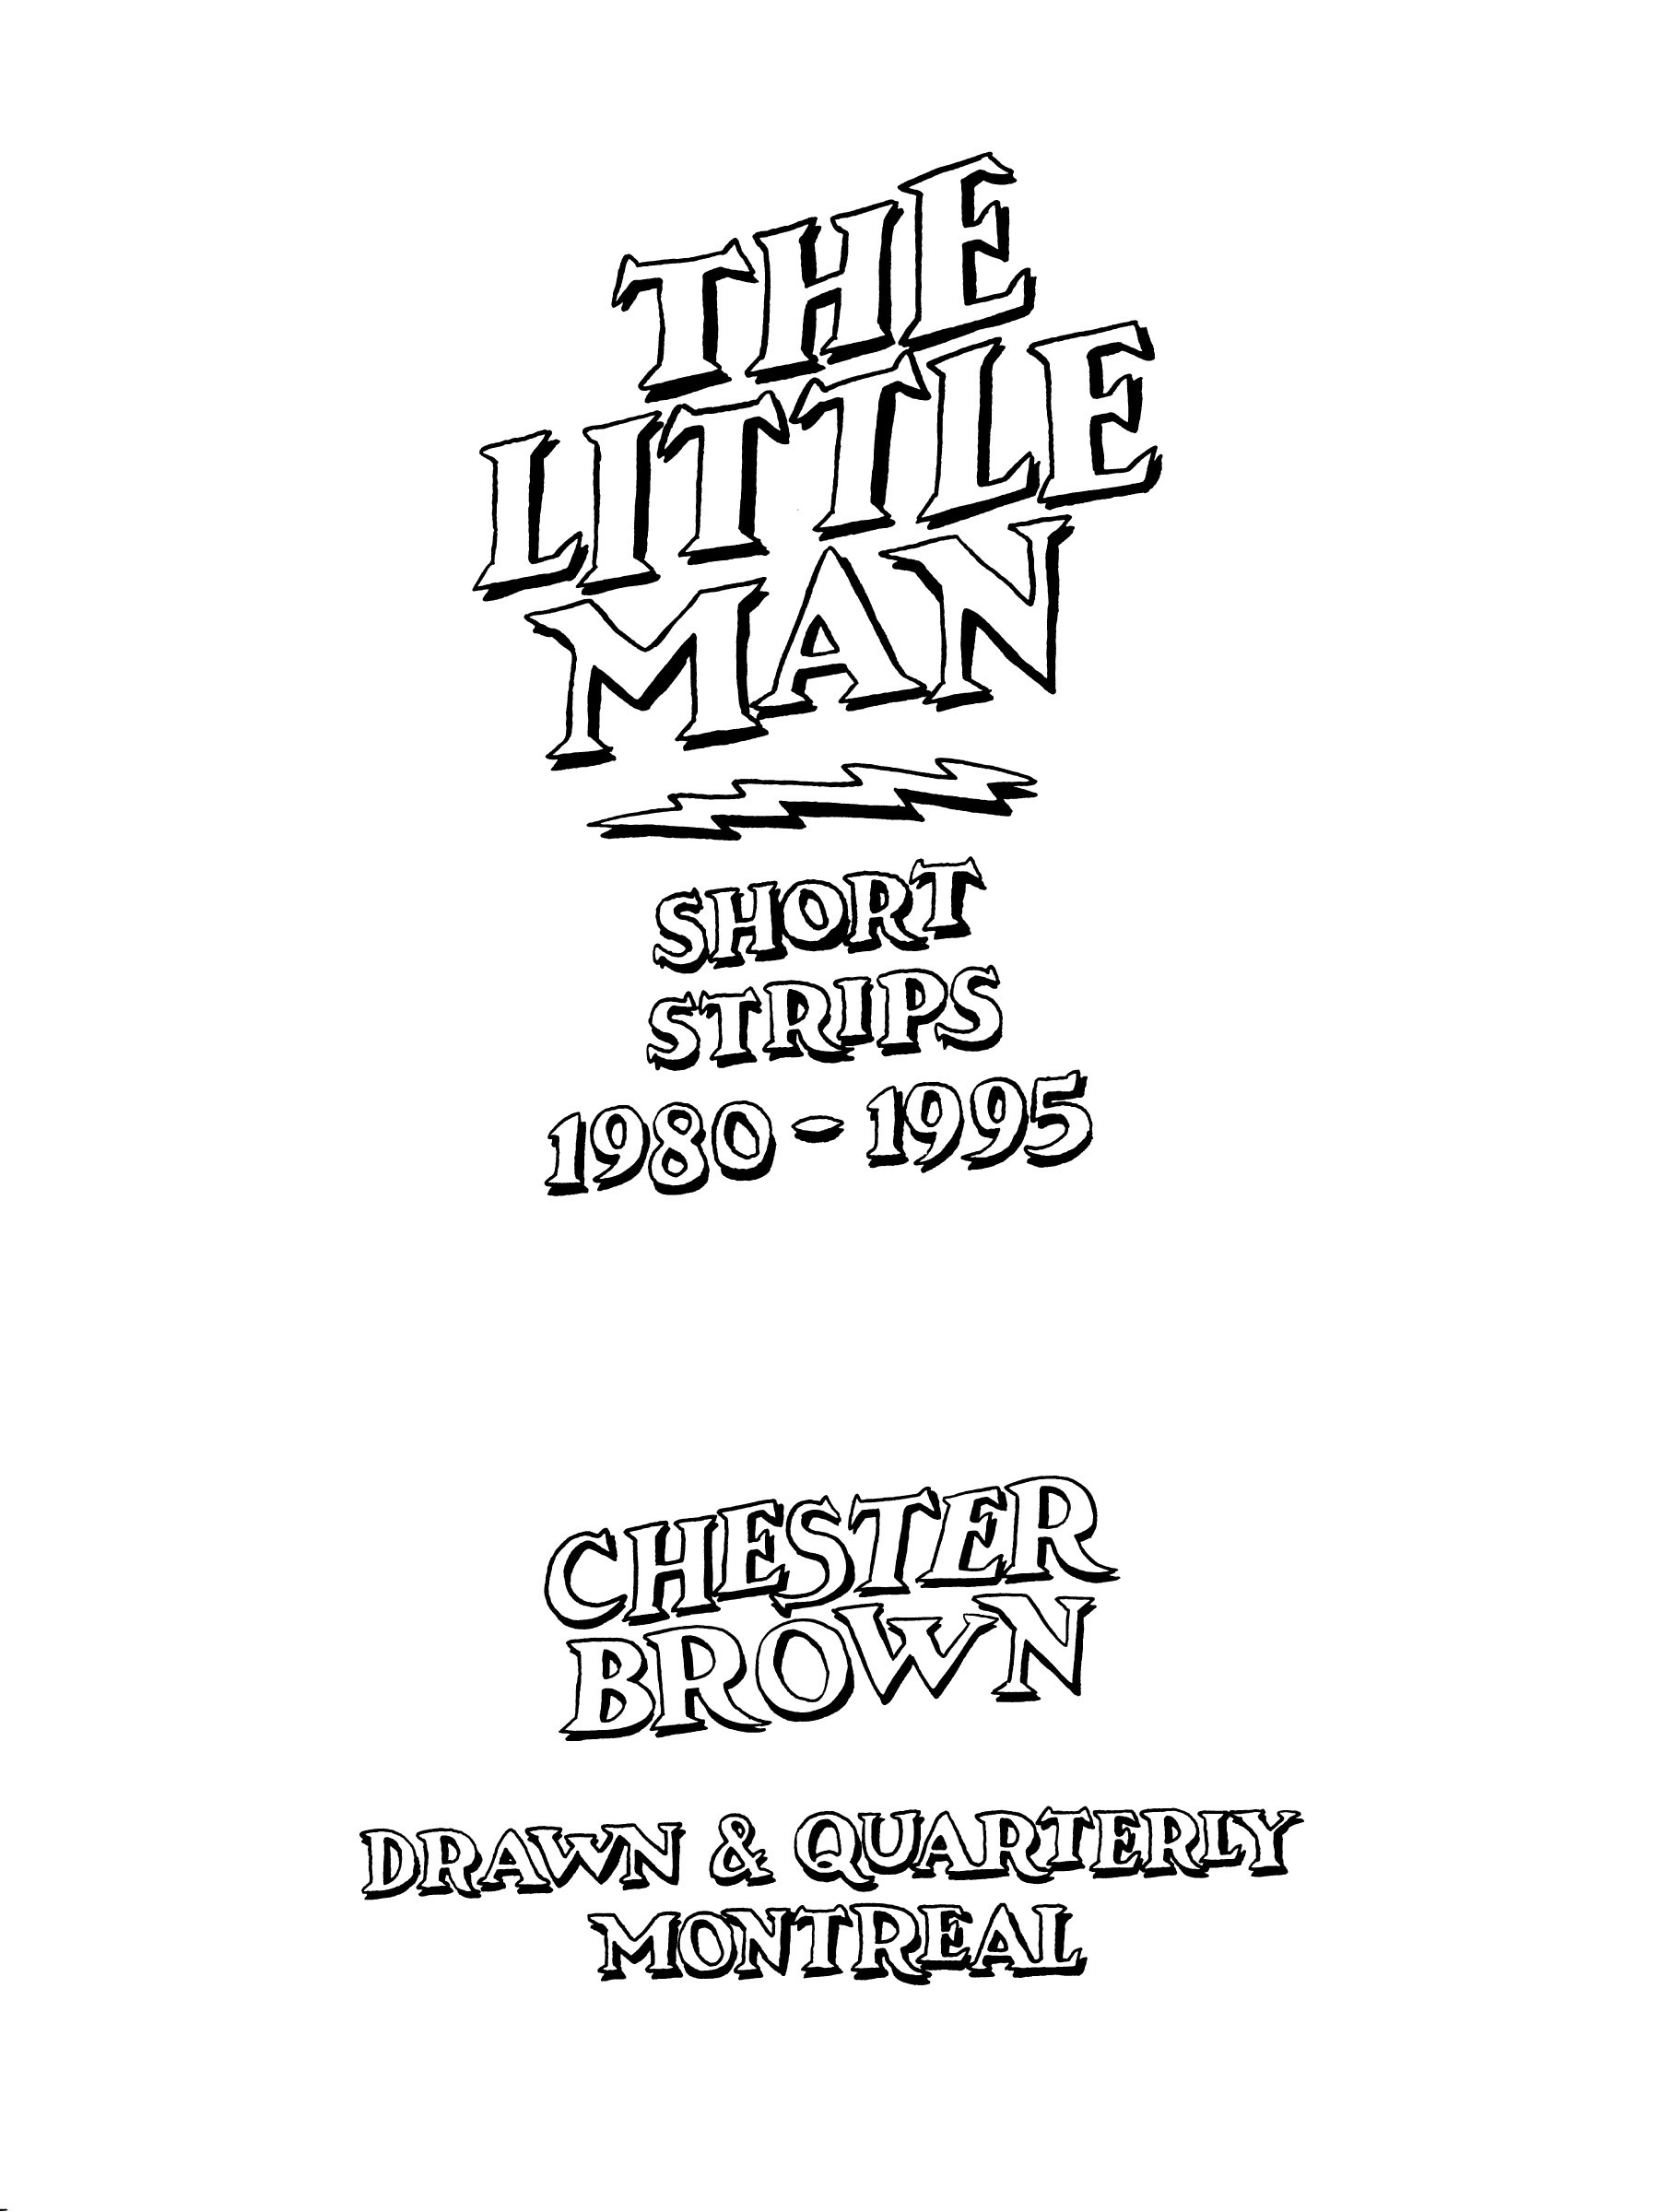 Read online Little Man: Short Strips 1980 - 1995 comic -  Issue # TPB (Part 1) - 5